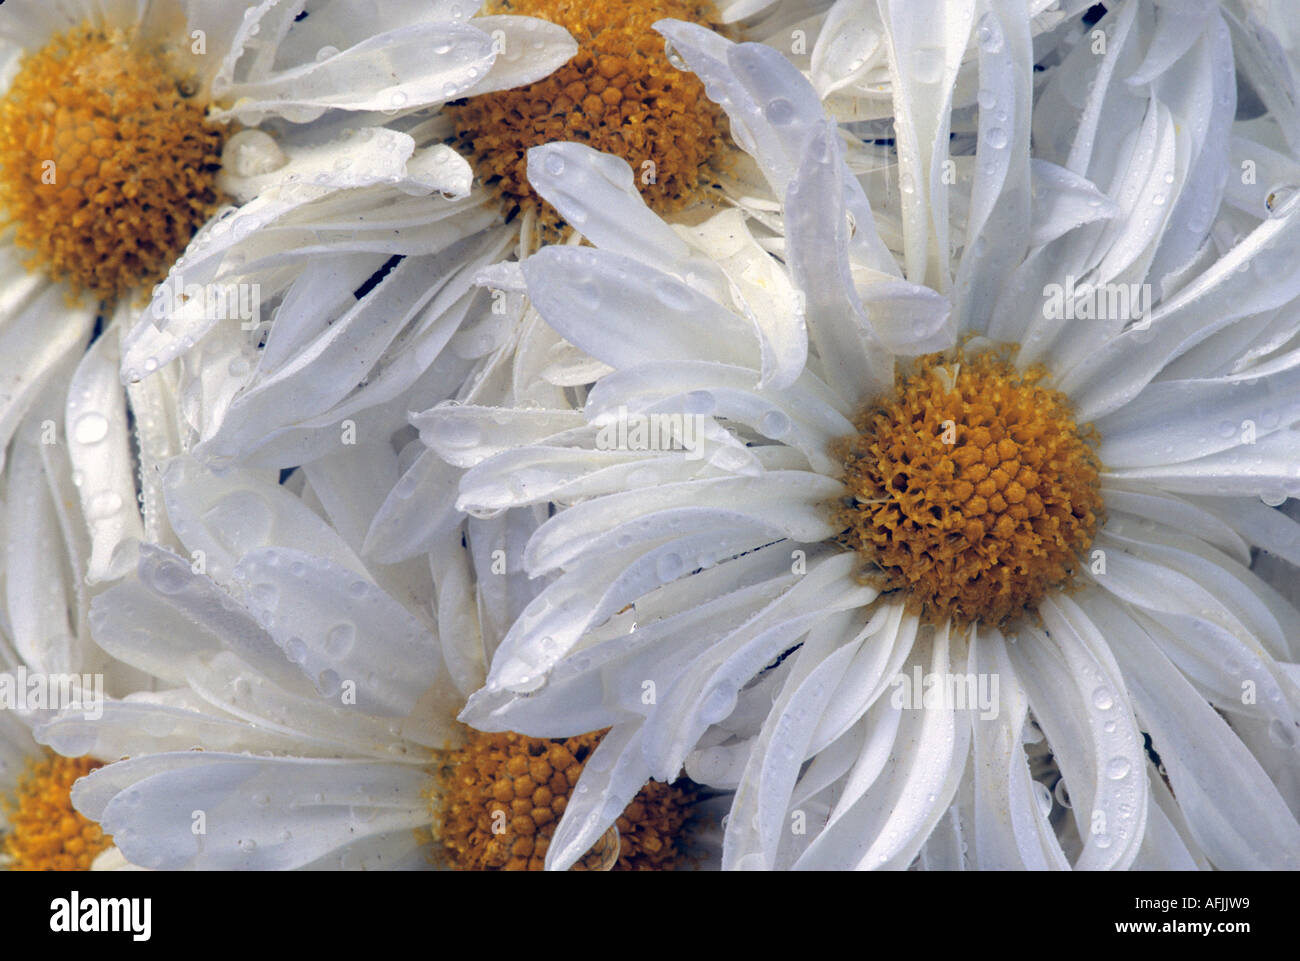 Hardy Daisy Chrysanthemum, Class 7, Semi-double Mum Stock Photo